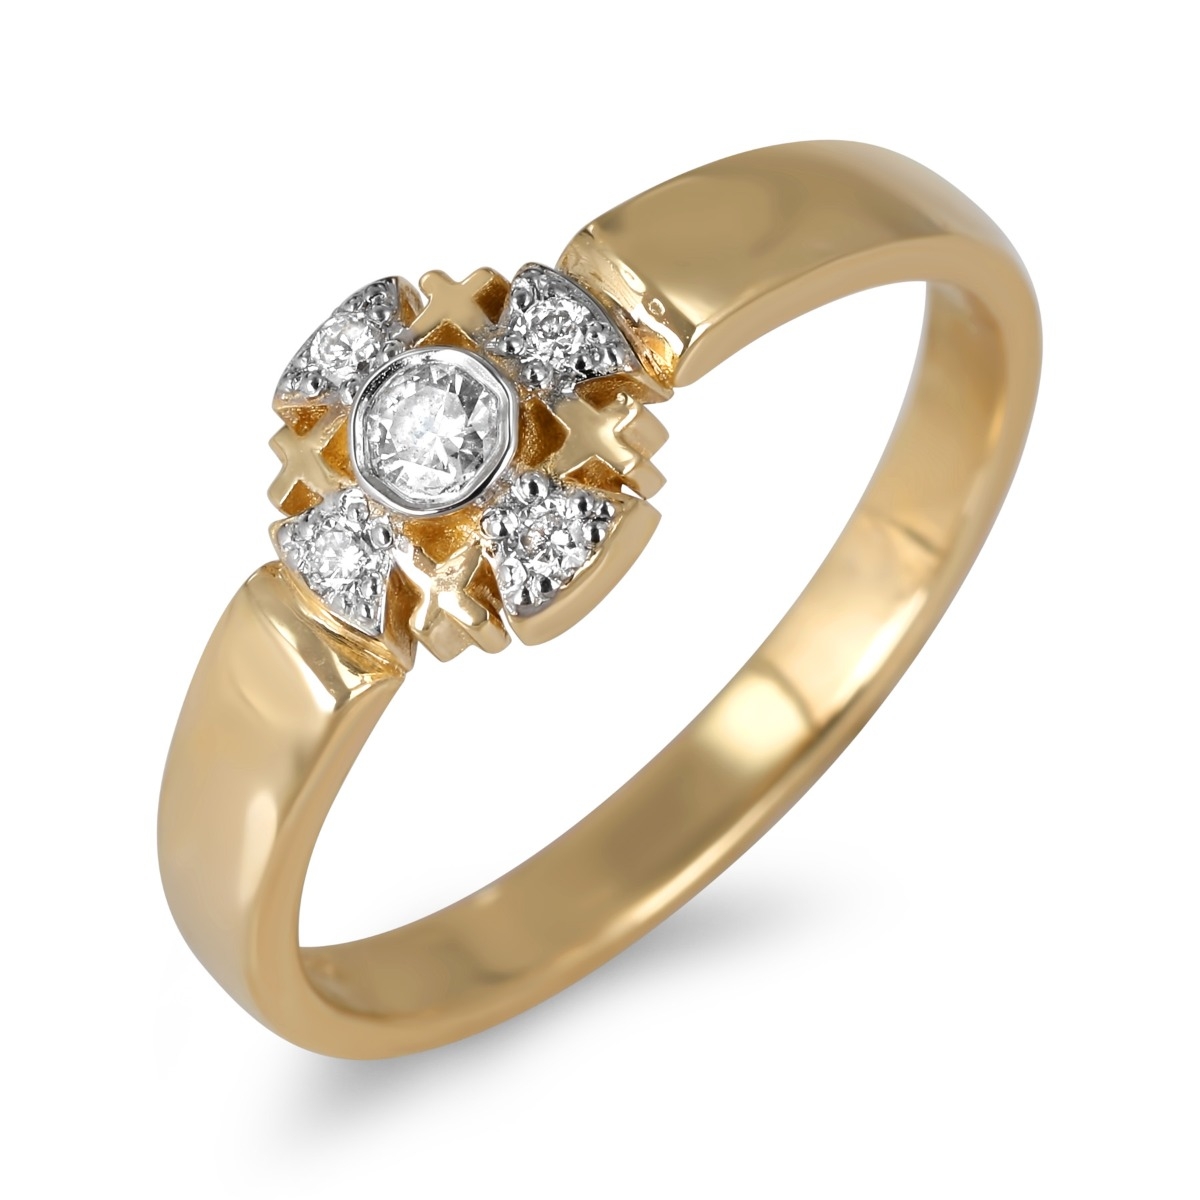 Anbinder Jewelry 14K Yellow Gold Jerusalem Cross Purity Ring with 5 Diamonds - 1